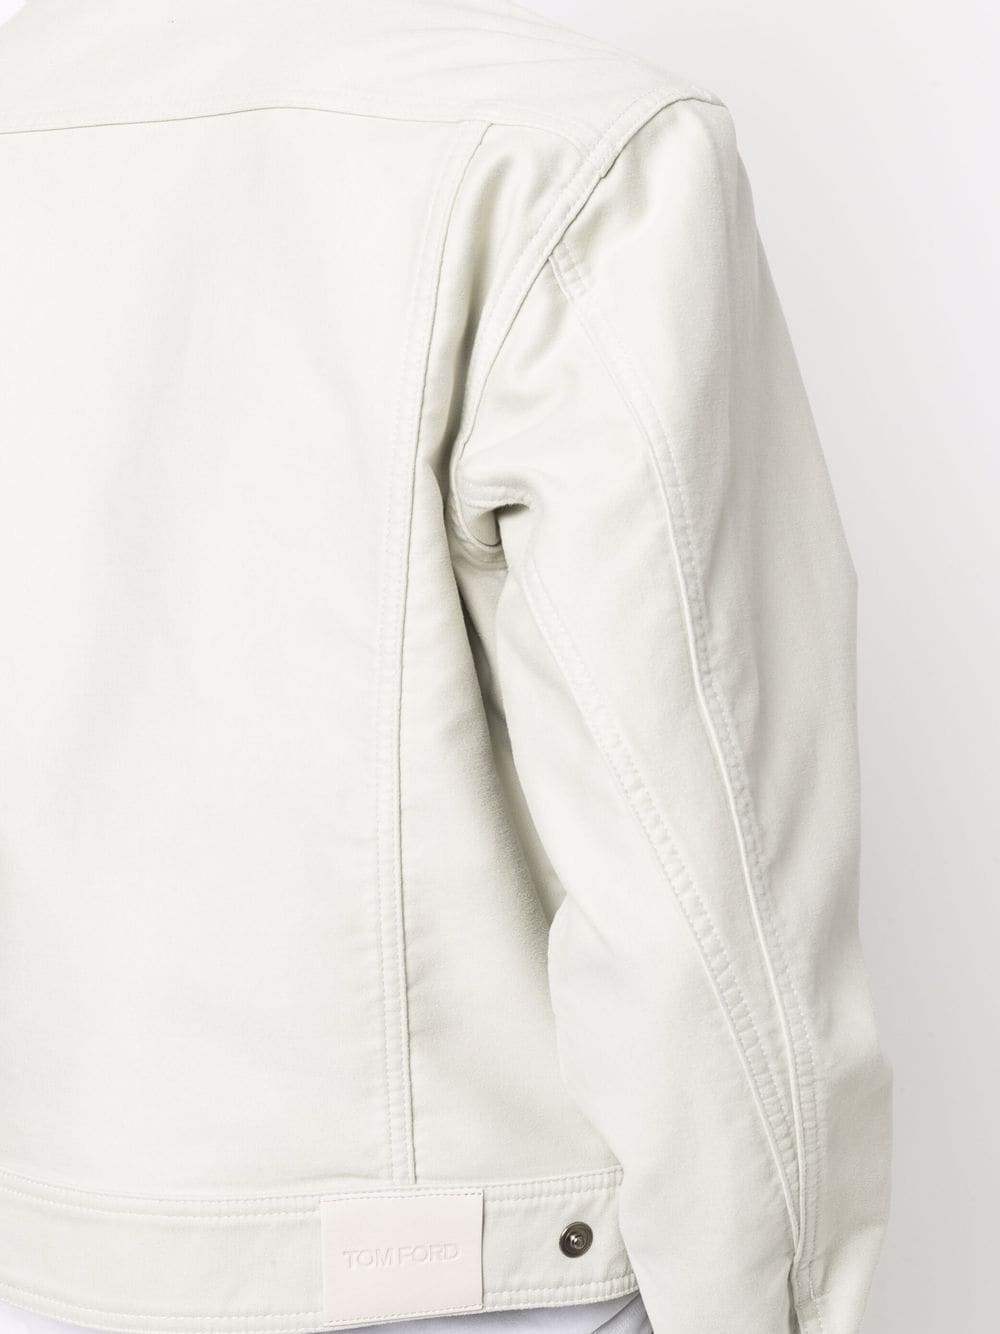 TOM FORD Zipped Brushed Cotton Shearling Collar Jacket Beige - MAISONDEFASHION.COM